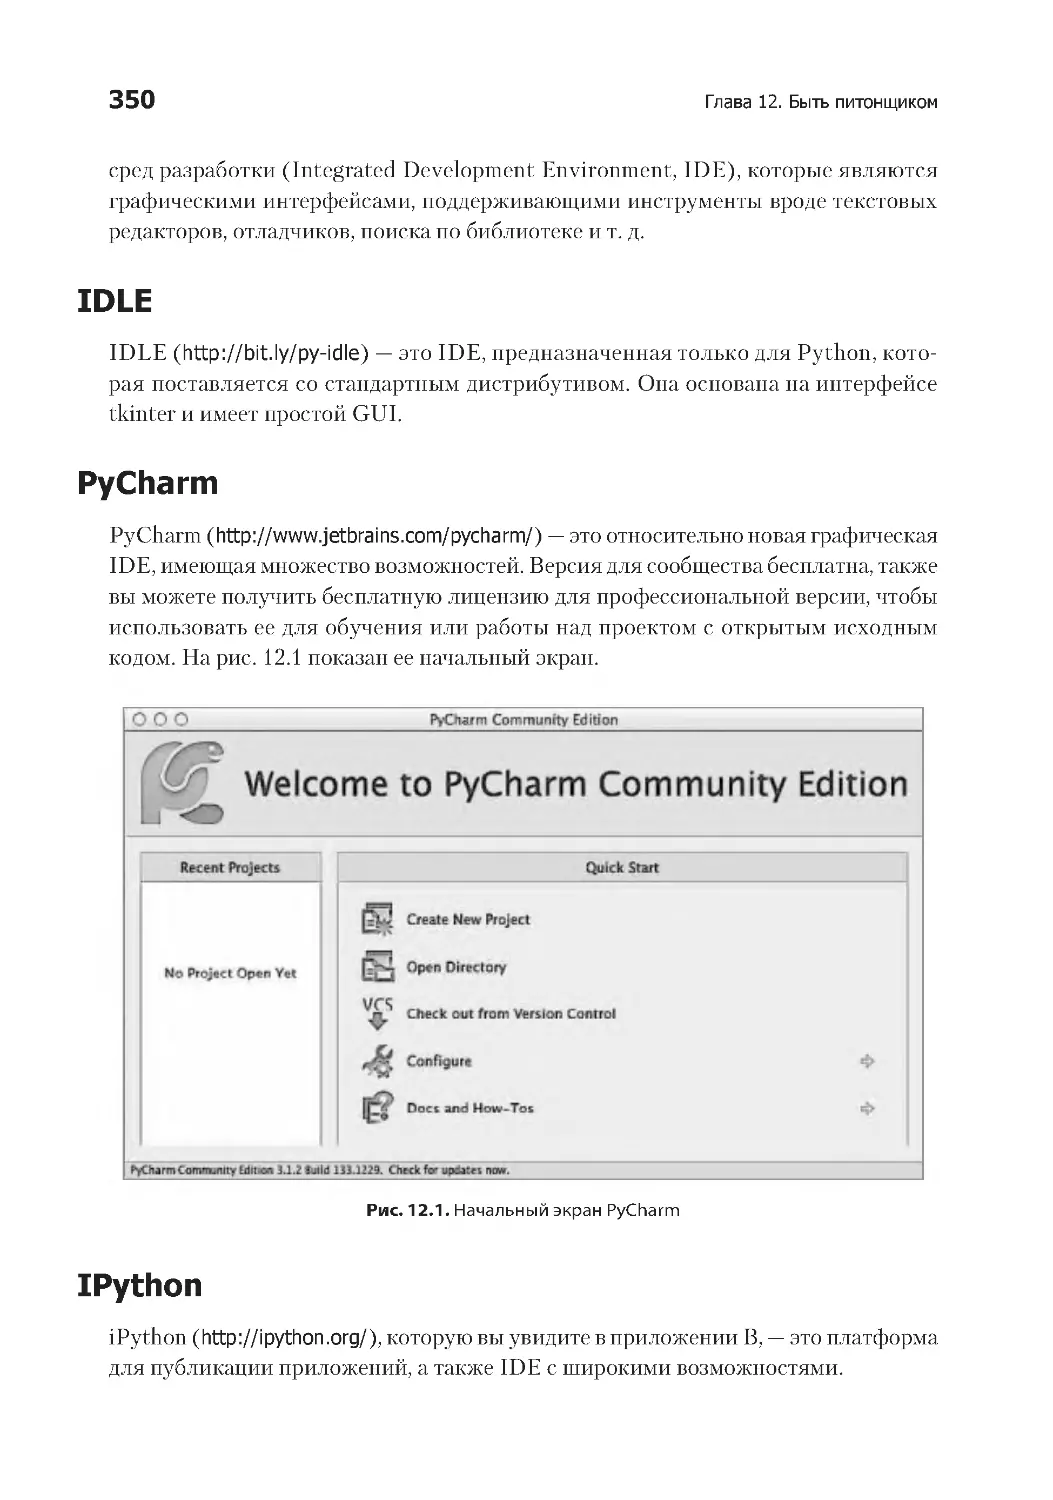 IDLE
PyCharm
IPython